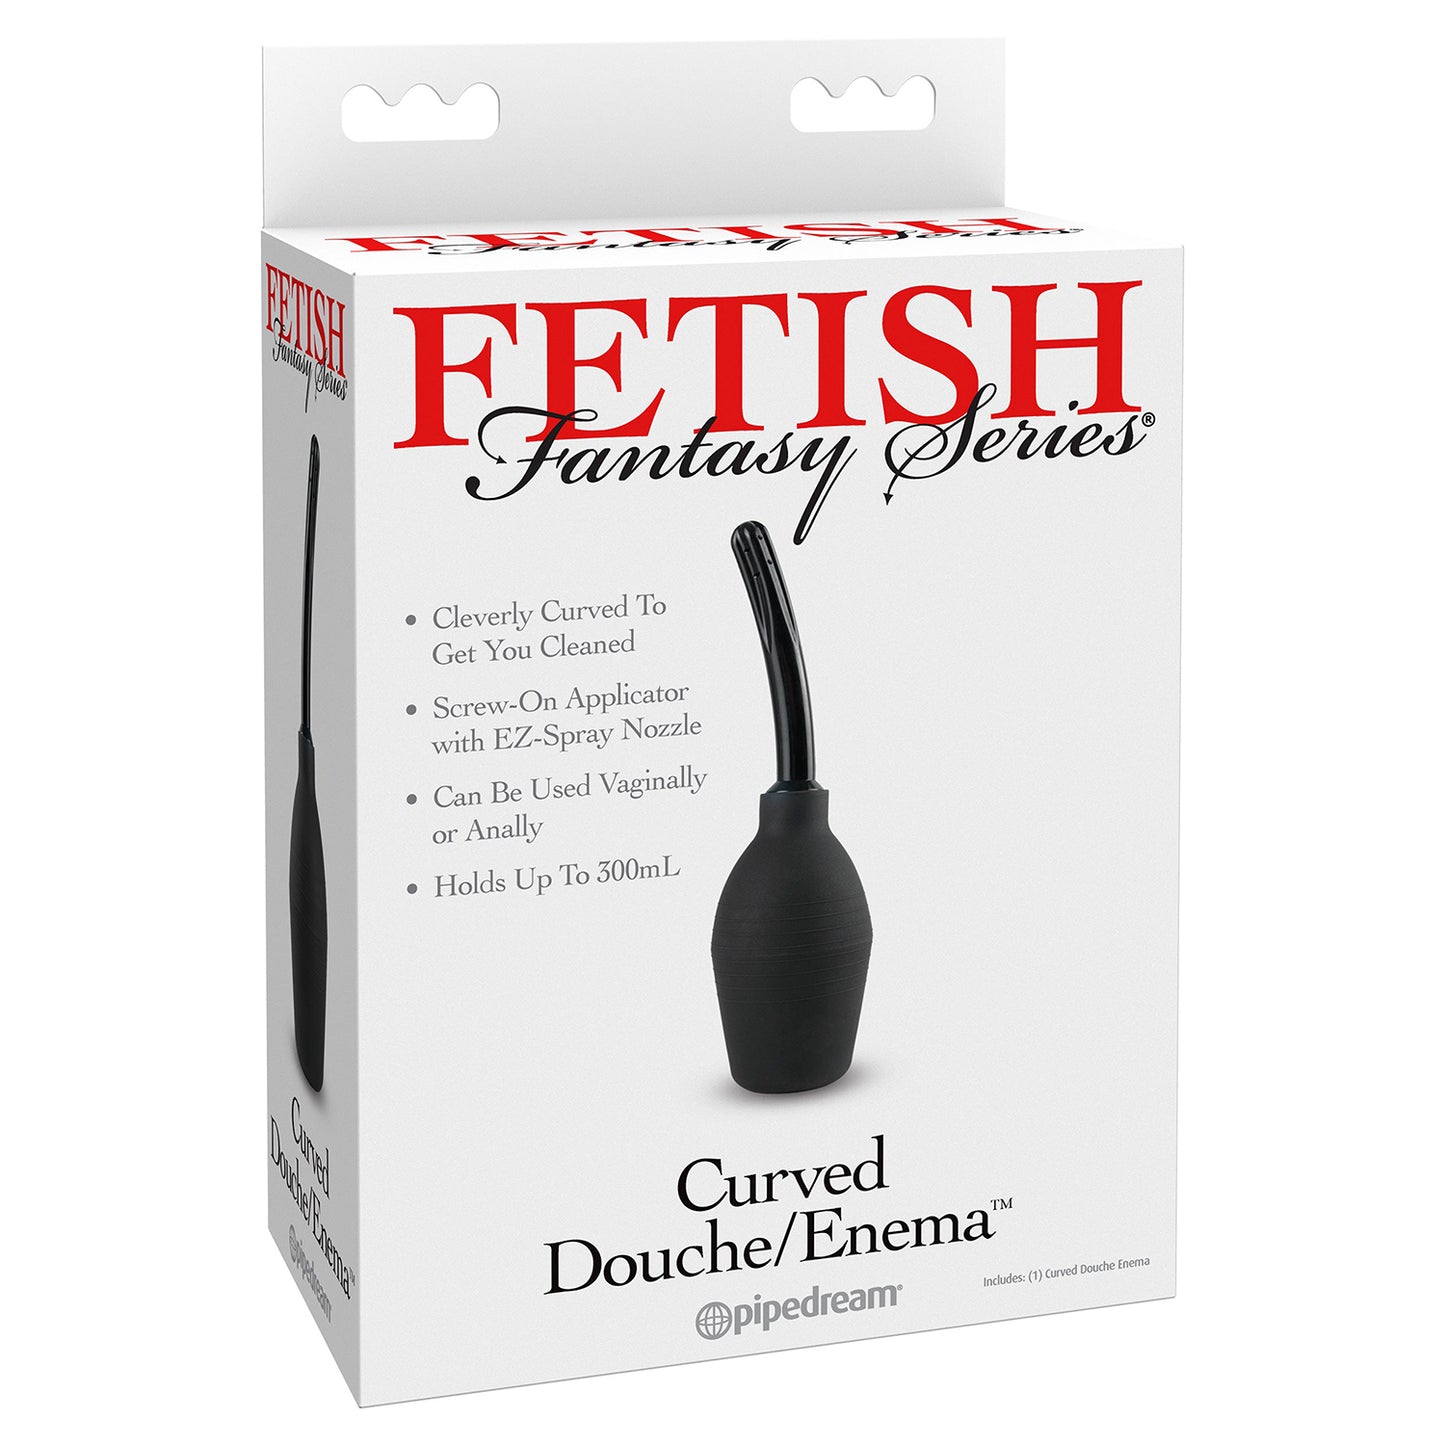 Fetish Fantasy Curved Douche/Enema - Black, 300ml